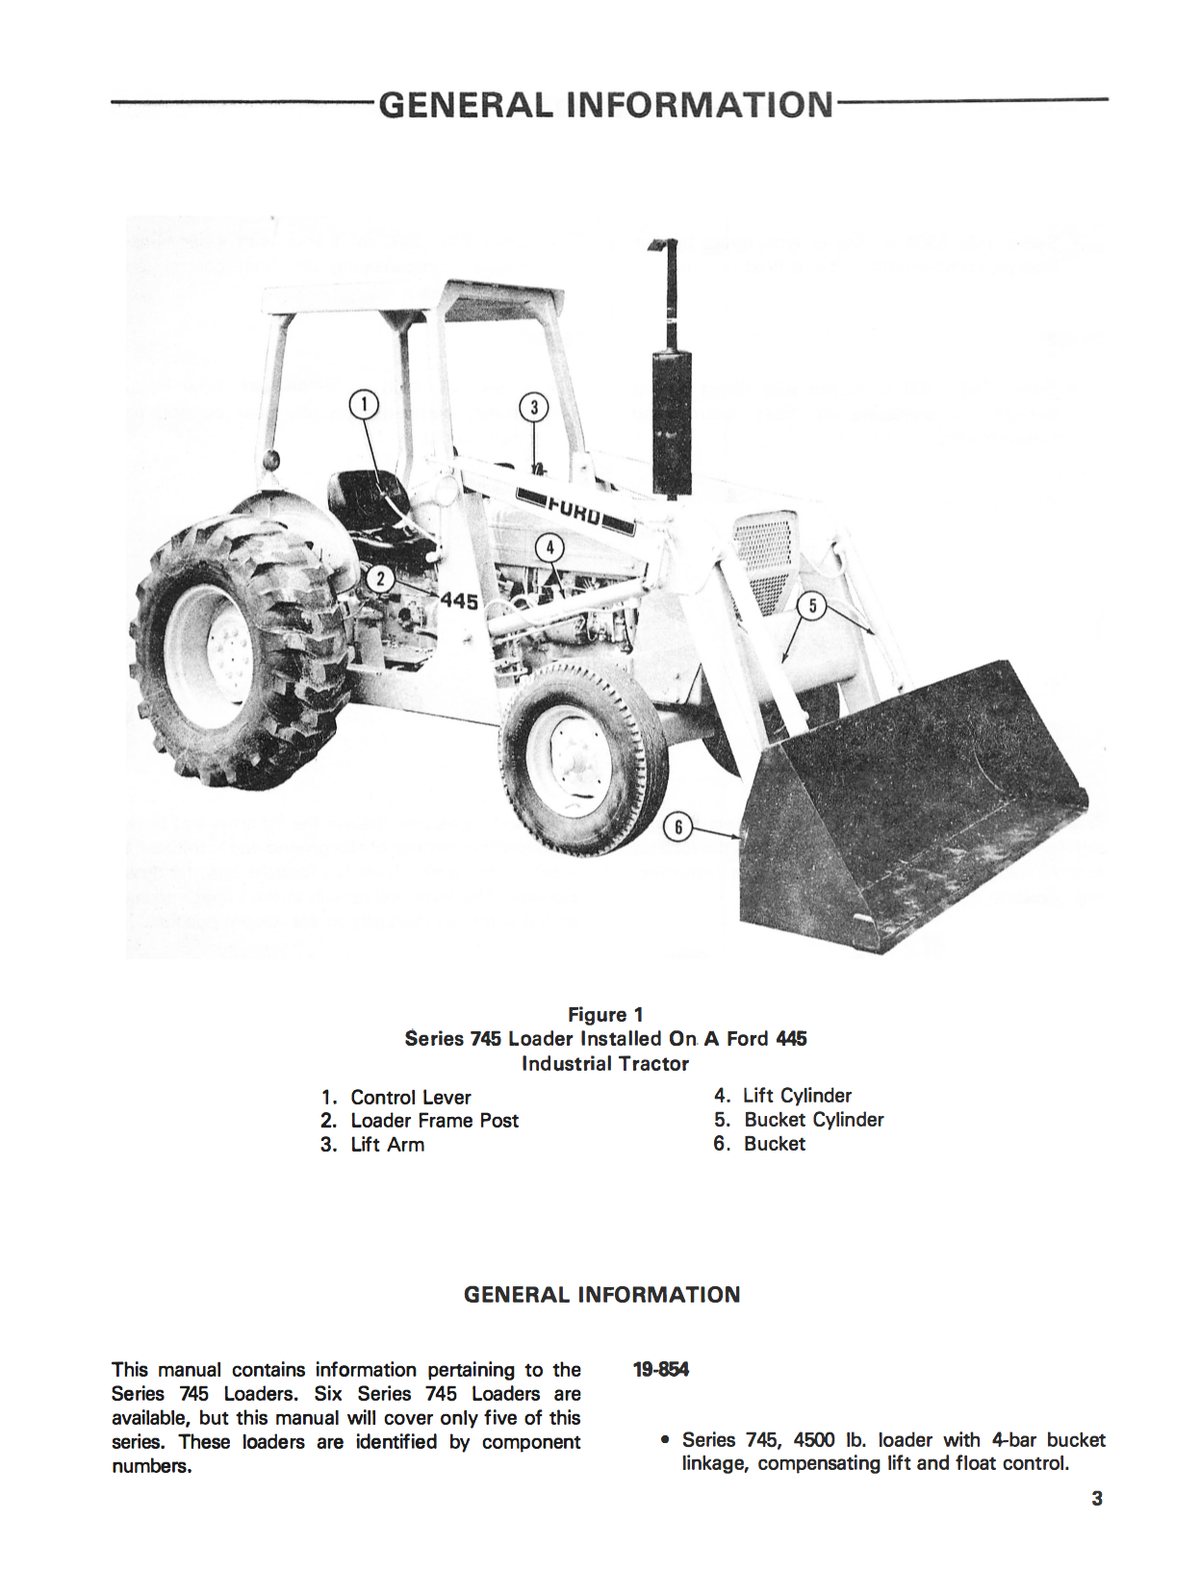 Ford Industrial 745 Series Loader - Operator's Manual - Ag Manuals - A Provider of Digital Farm Manuals - 3